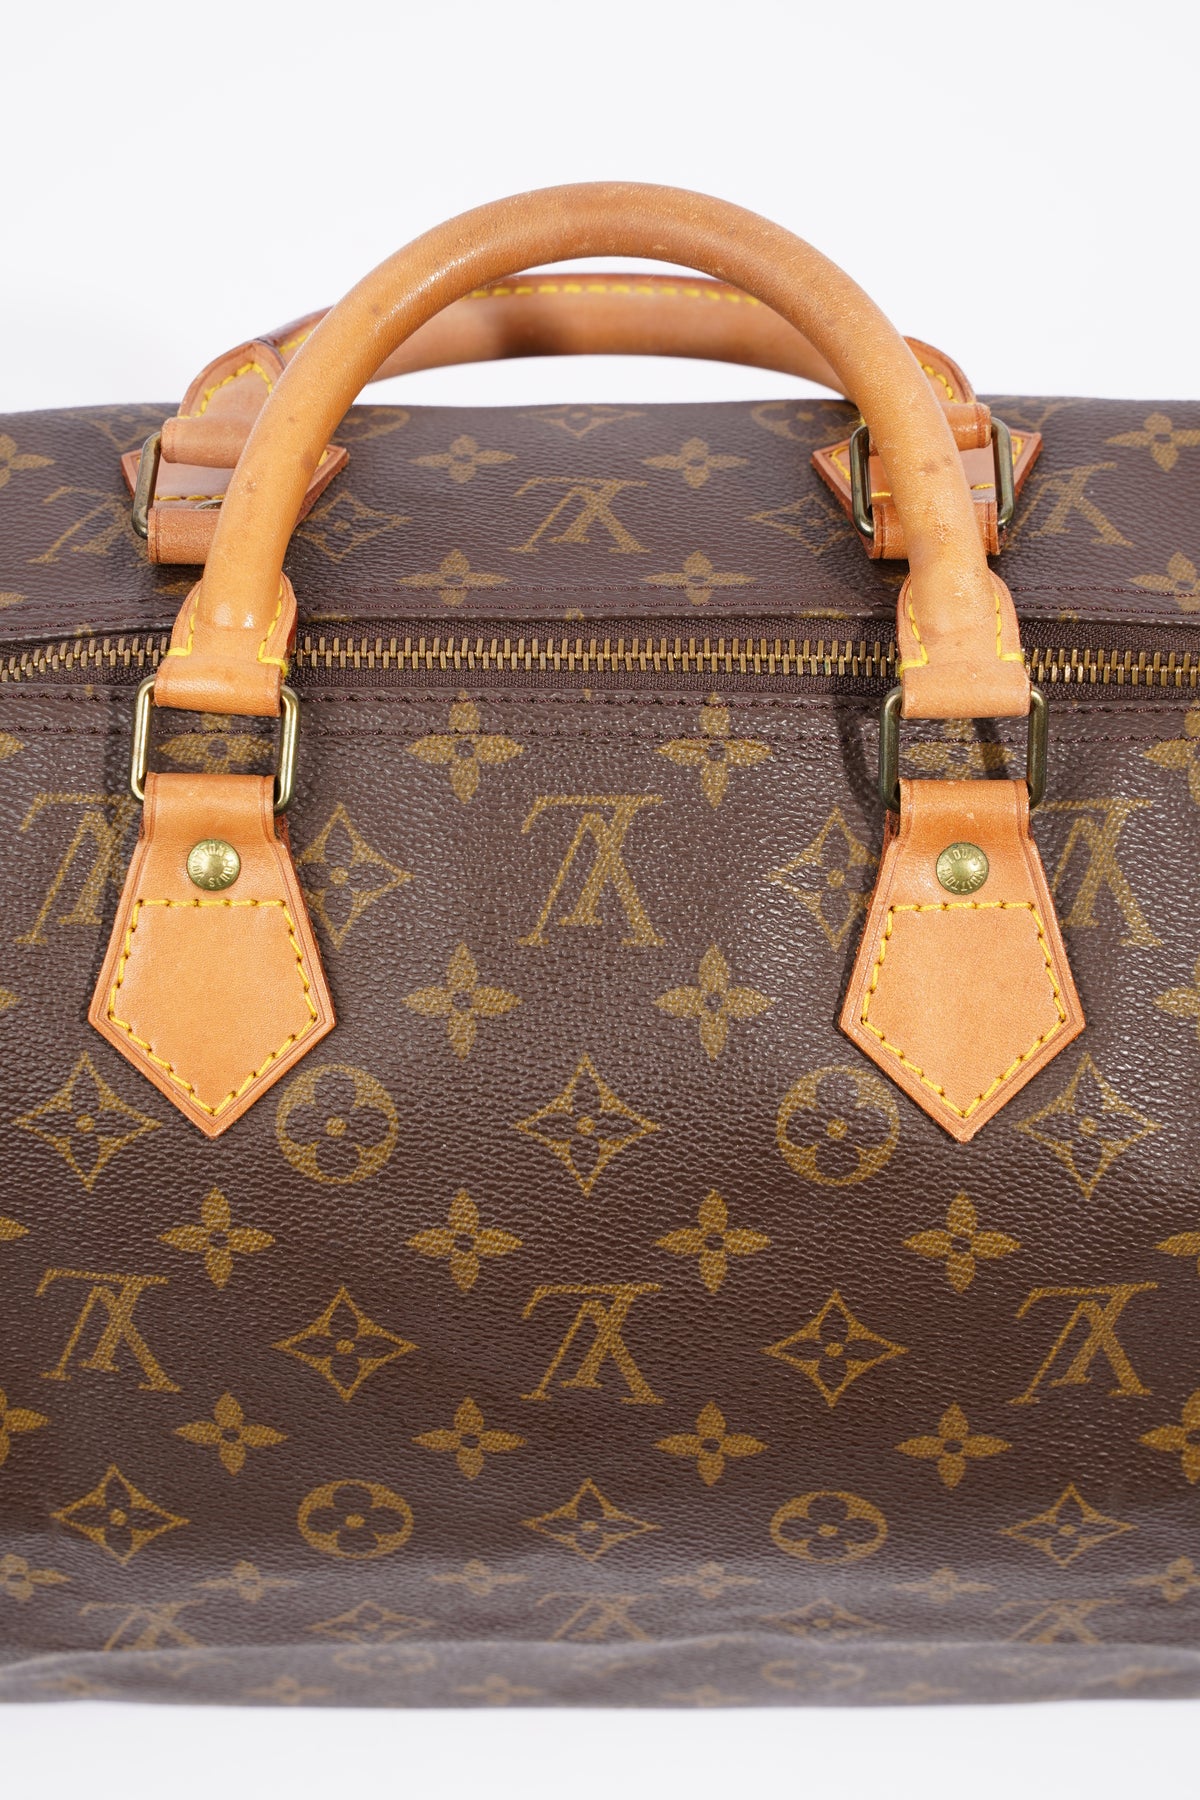 Louis Vuitton Art Bags Belgium, SAVE 40% 